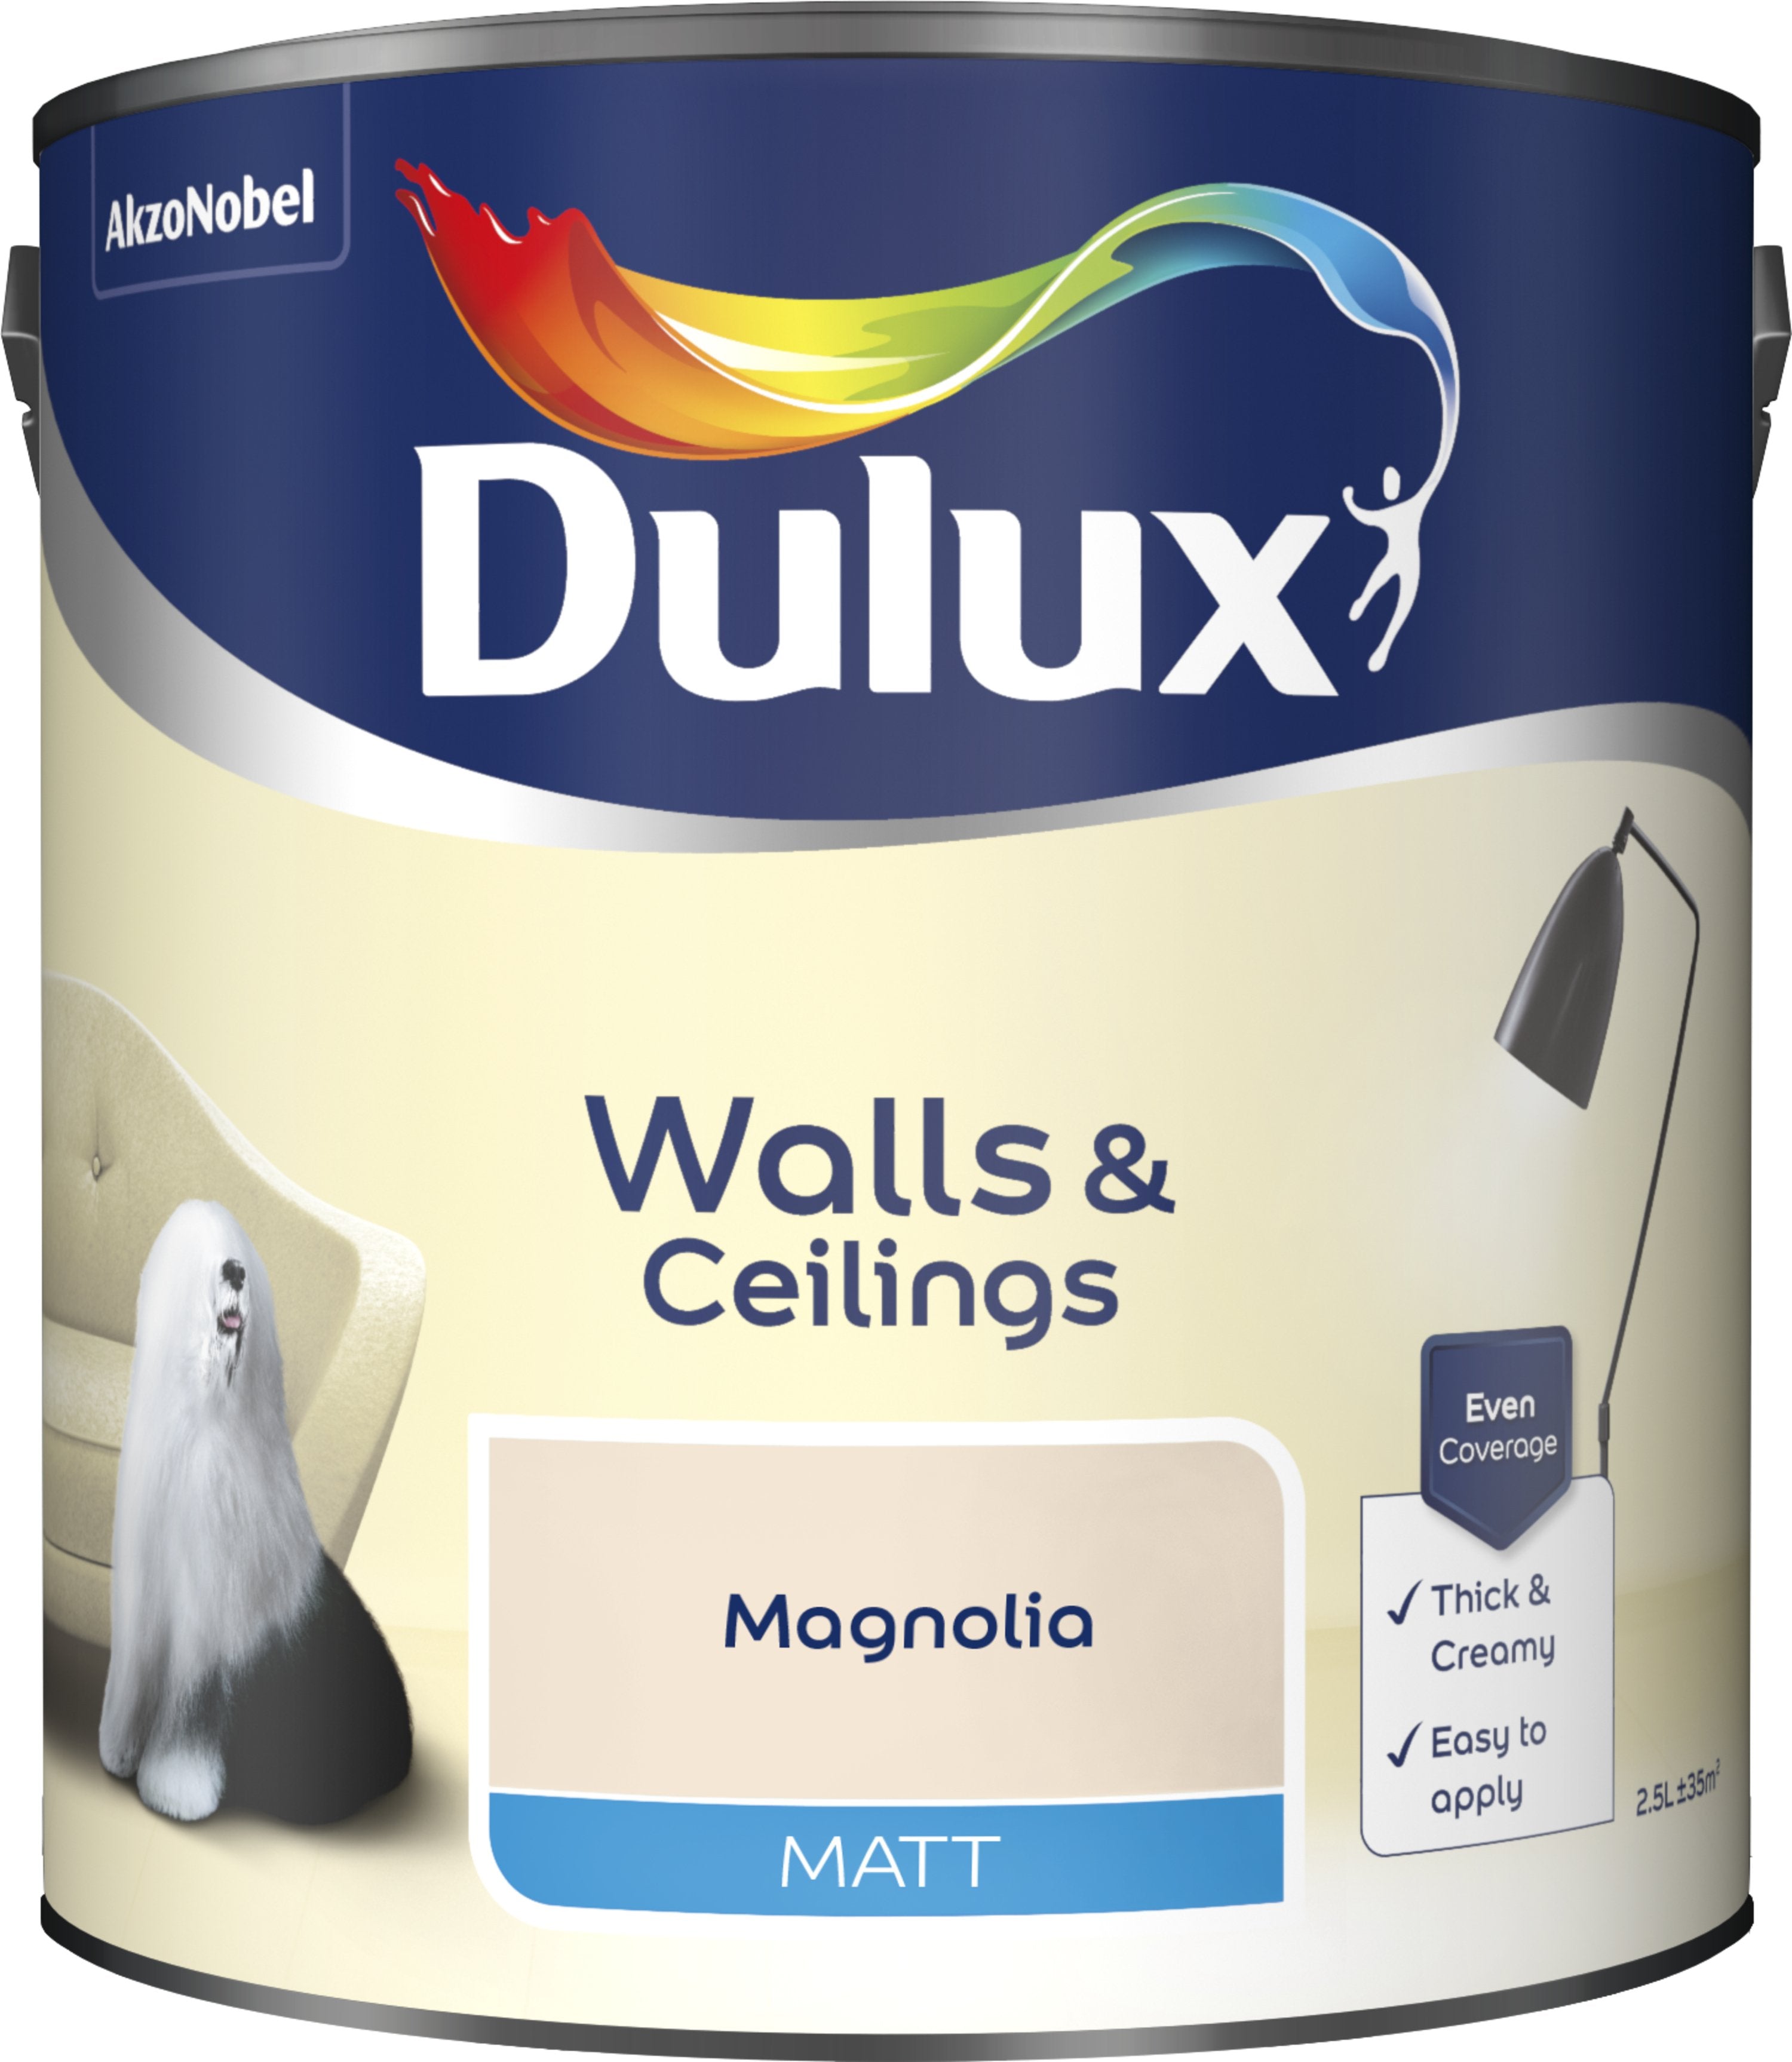 Dulux Matt Emulsion Paint For Walls And Ceilings - Magnolia 2.5L Garden & Diy  Home Improvements  